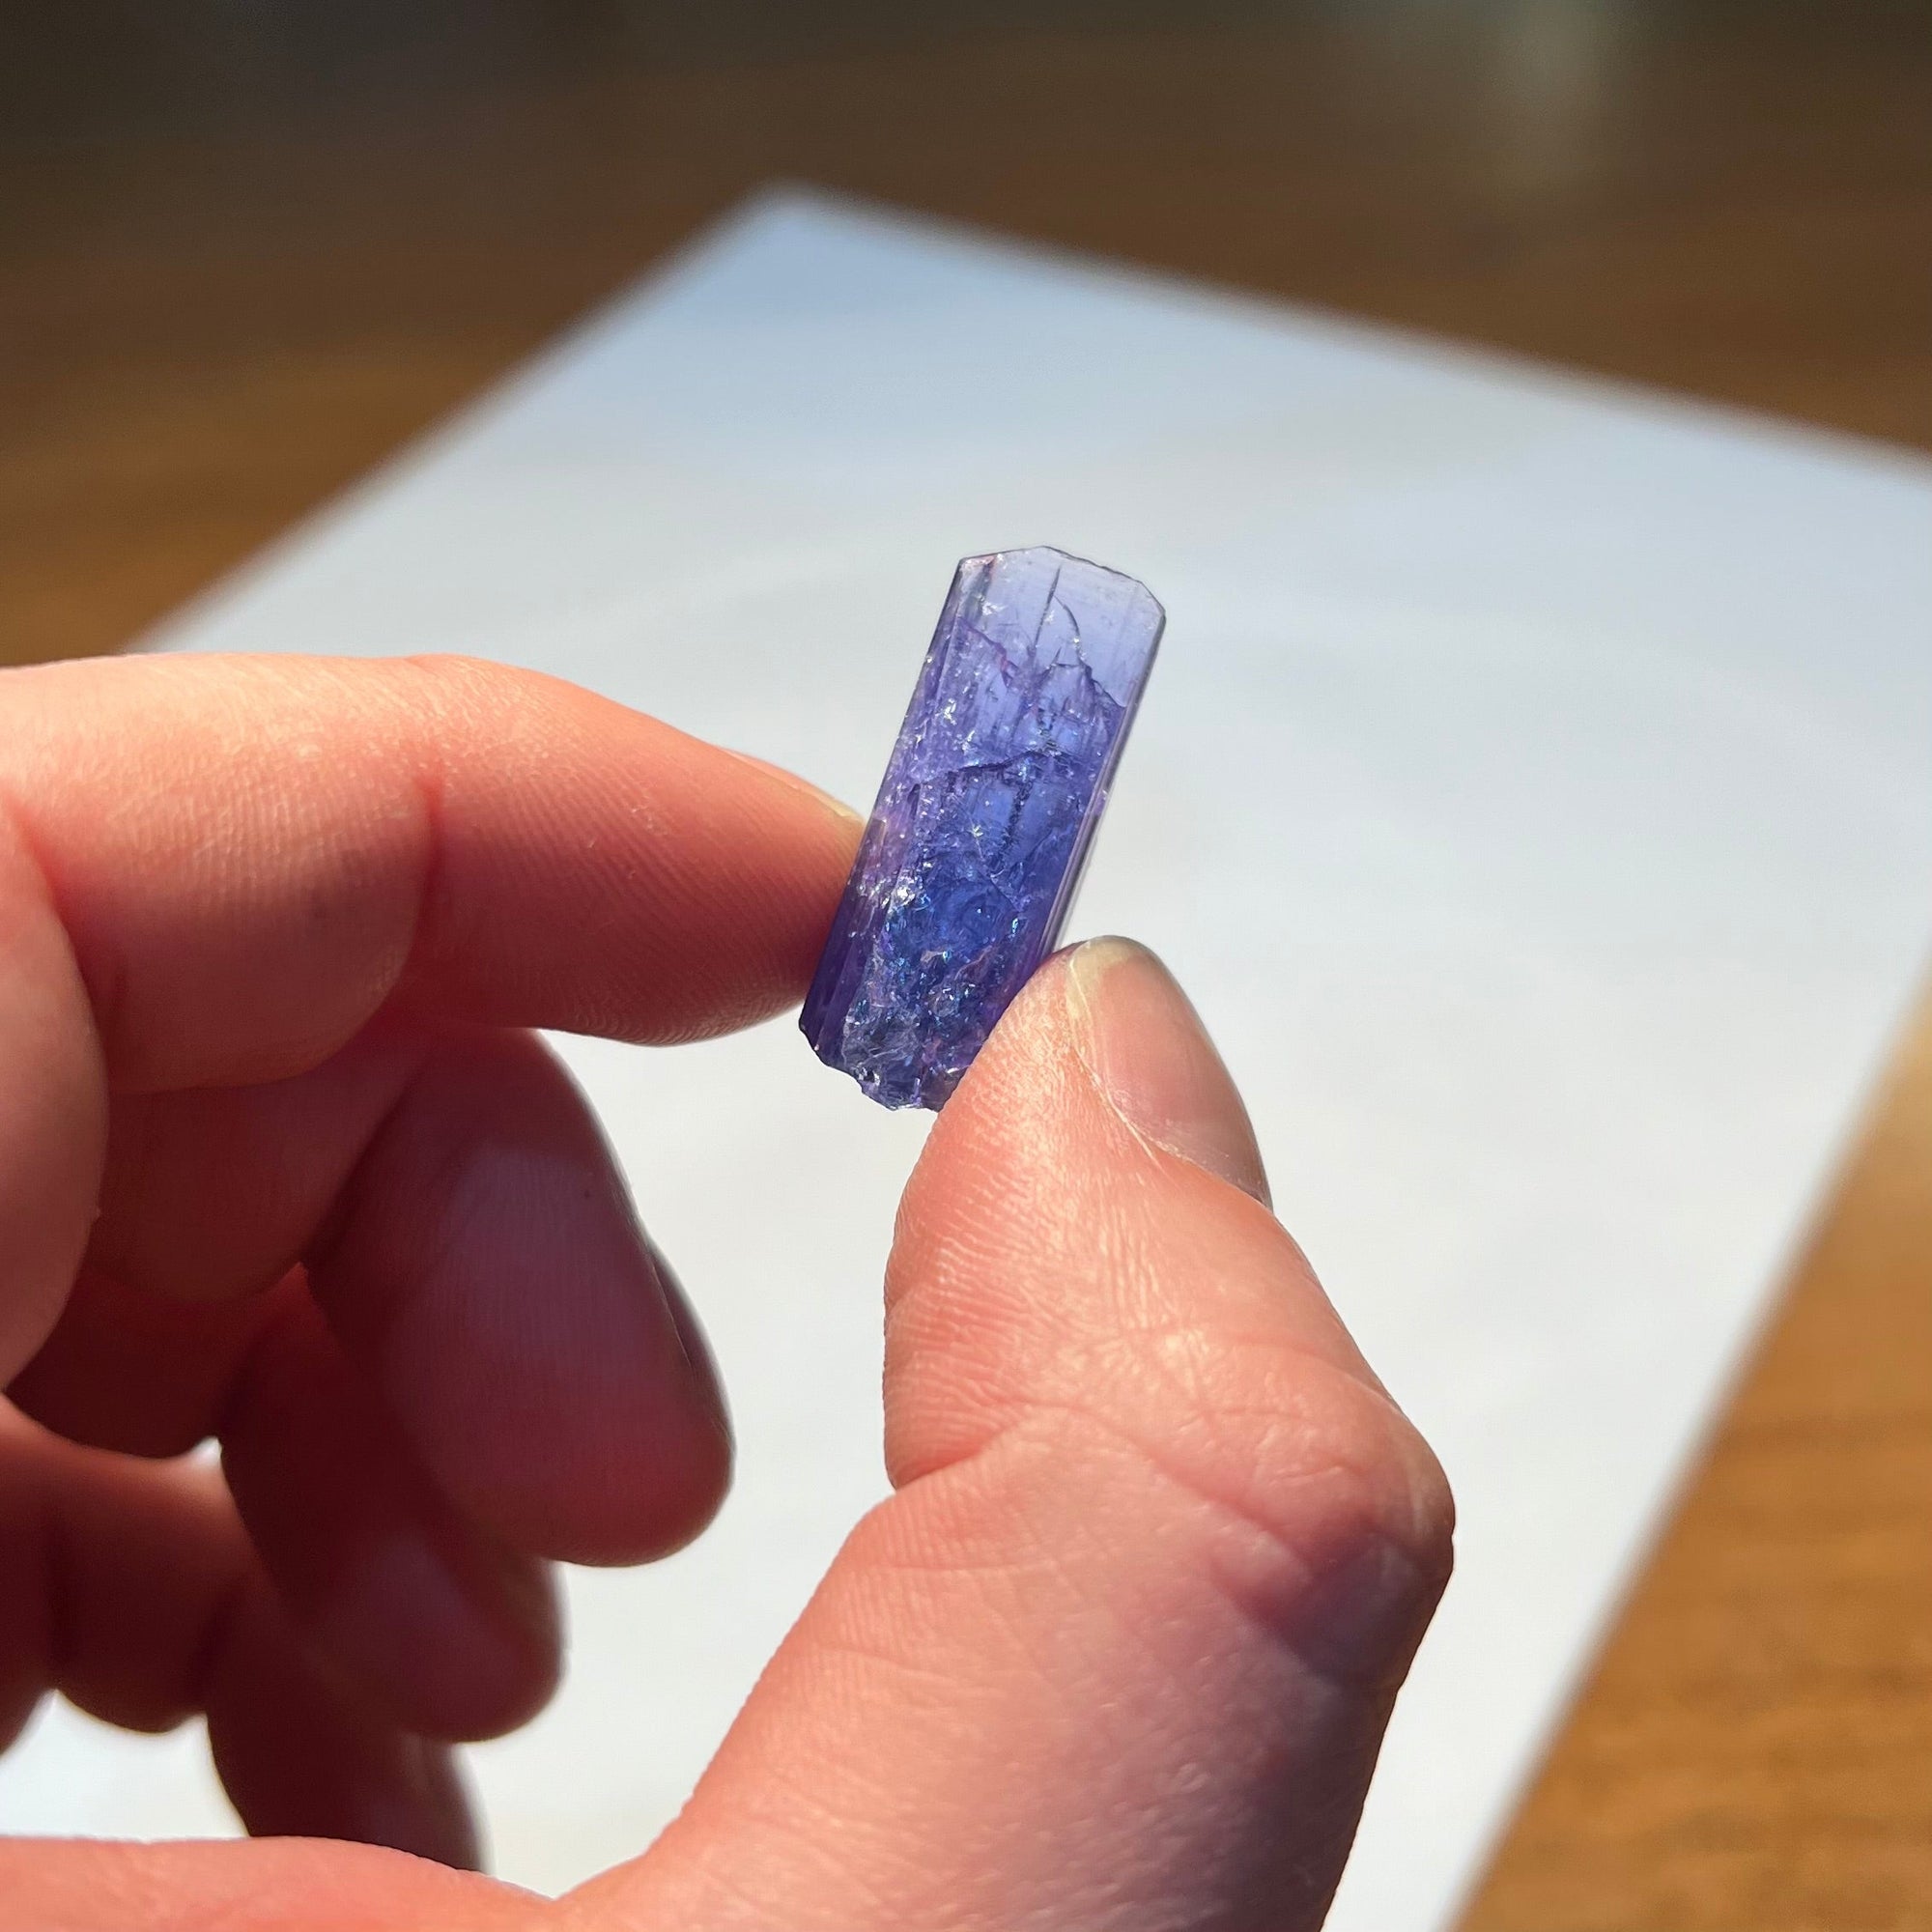 Heated Tanzanite Crystal from Tanzania